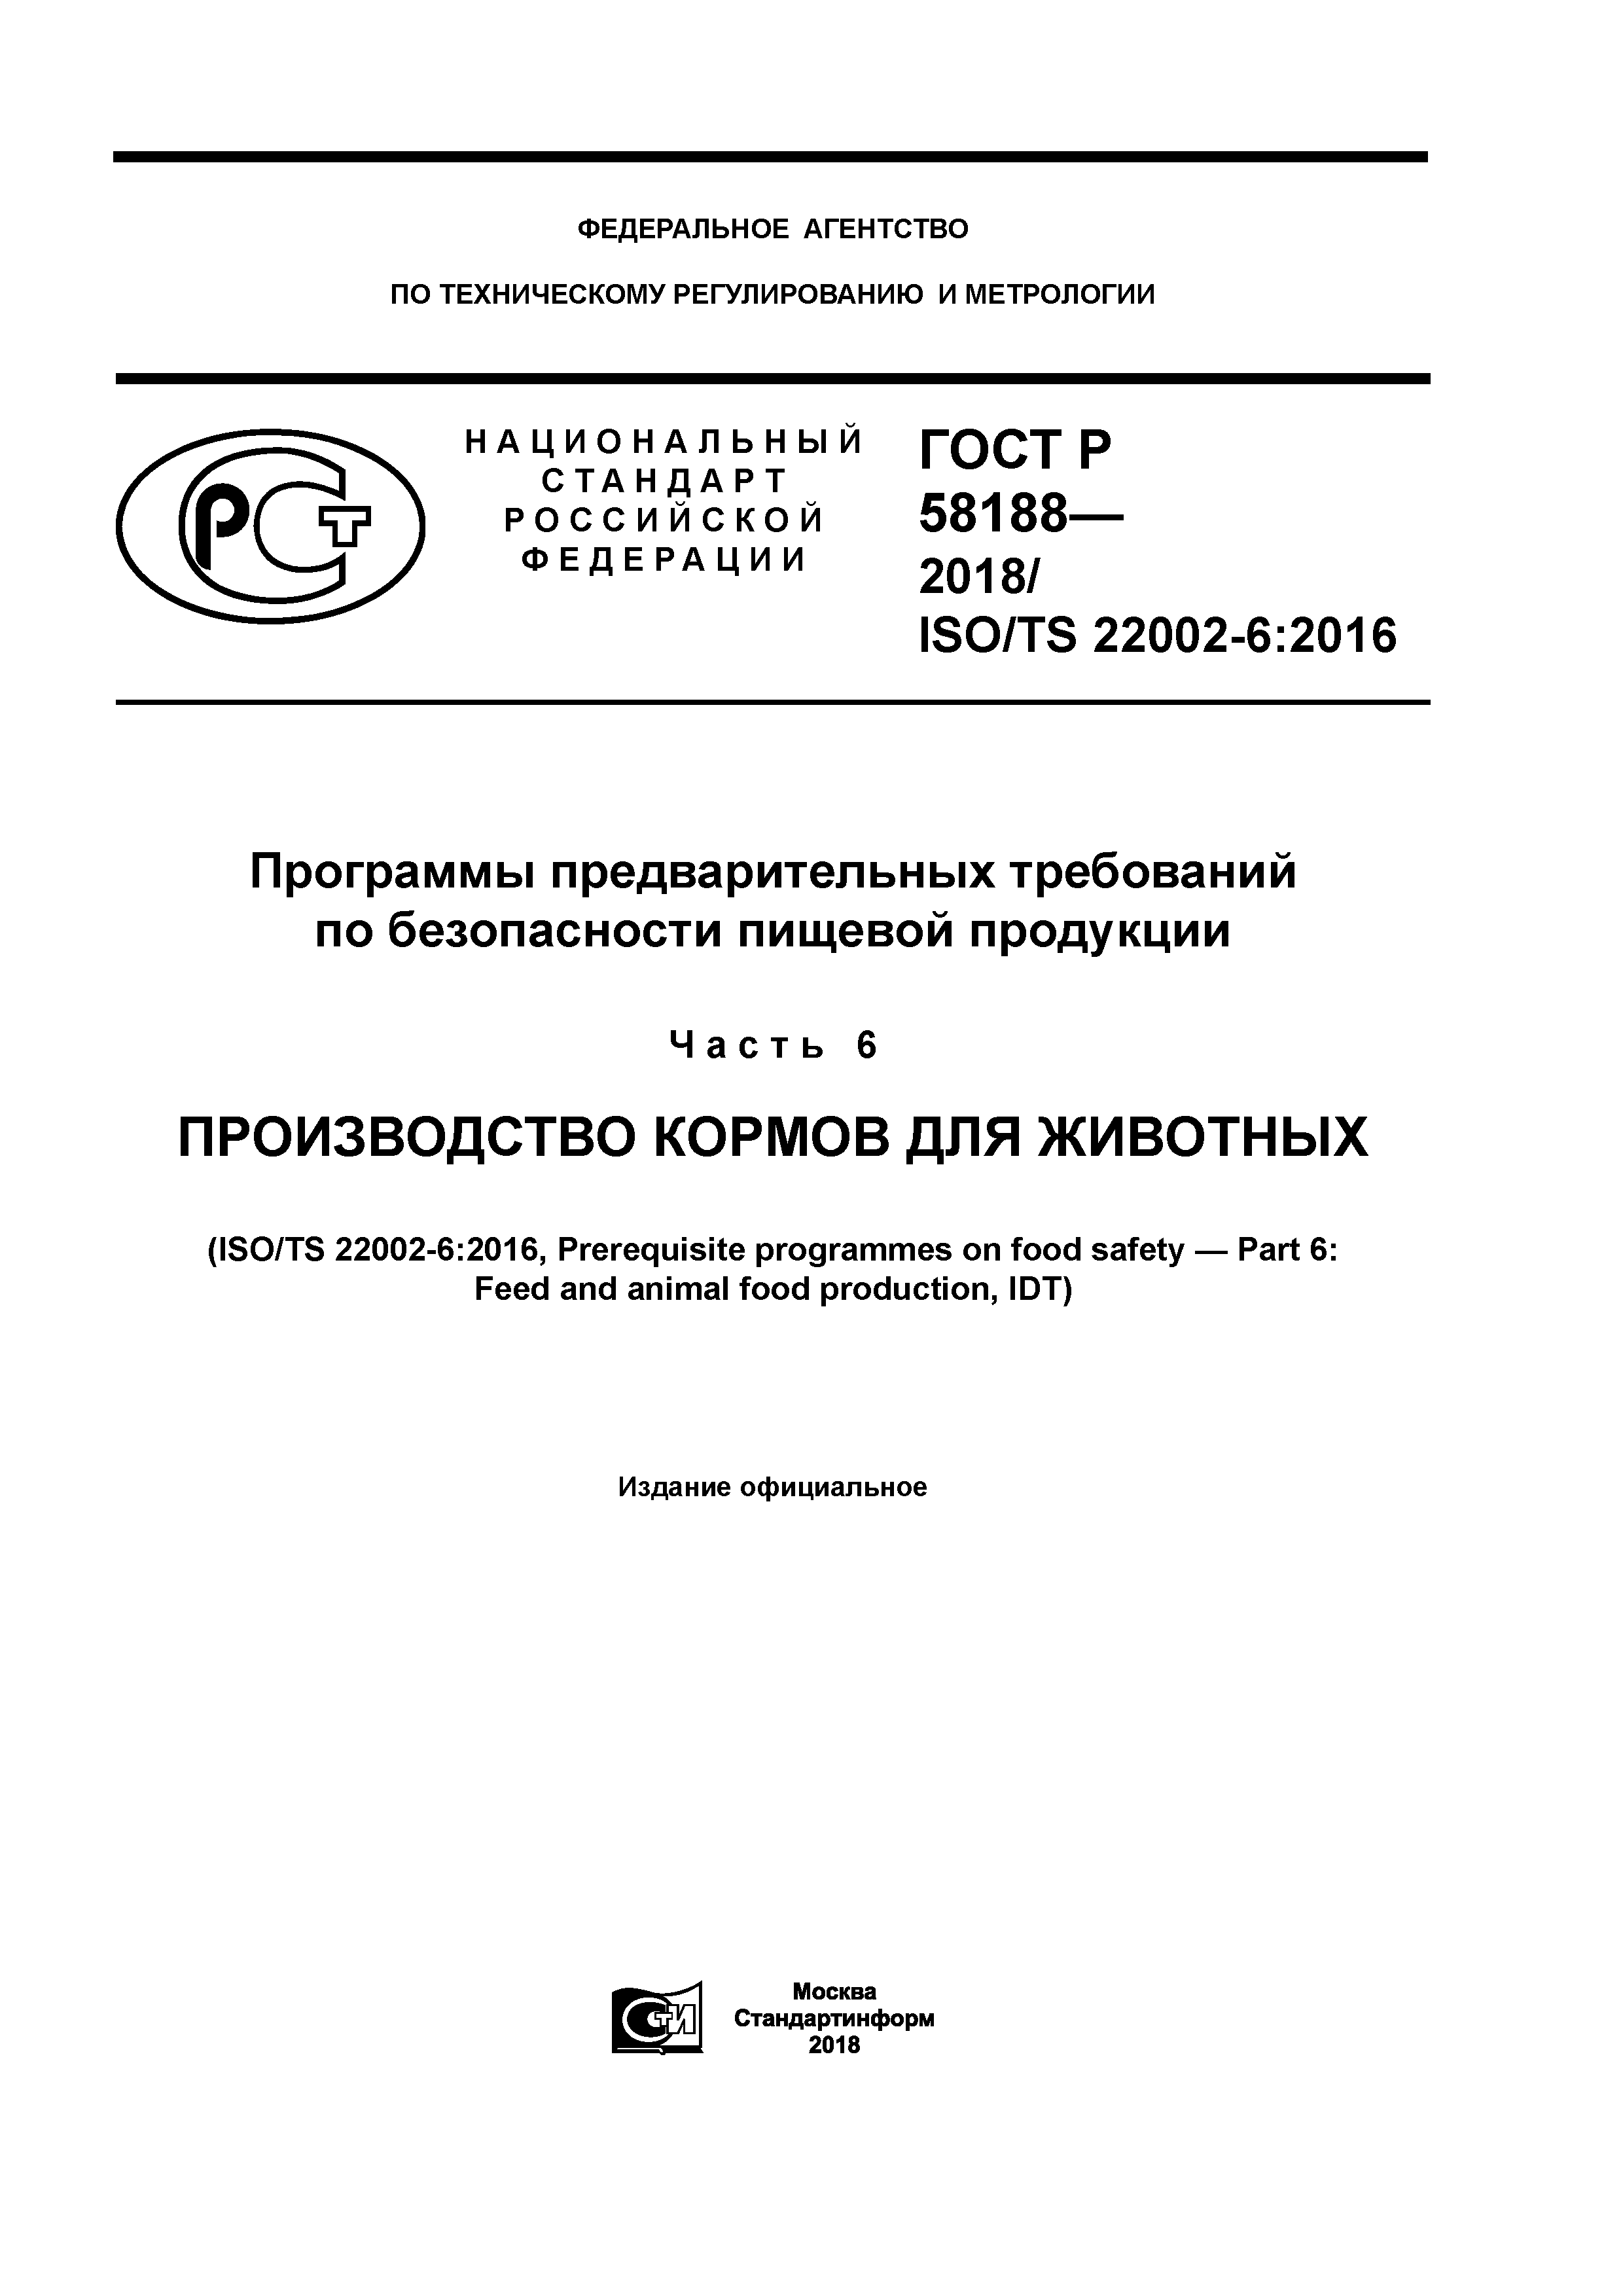 ГОСТ Р 58188-2018